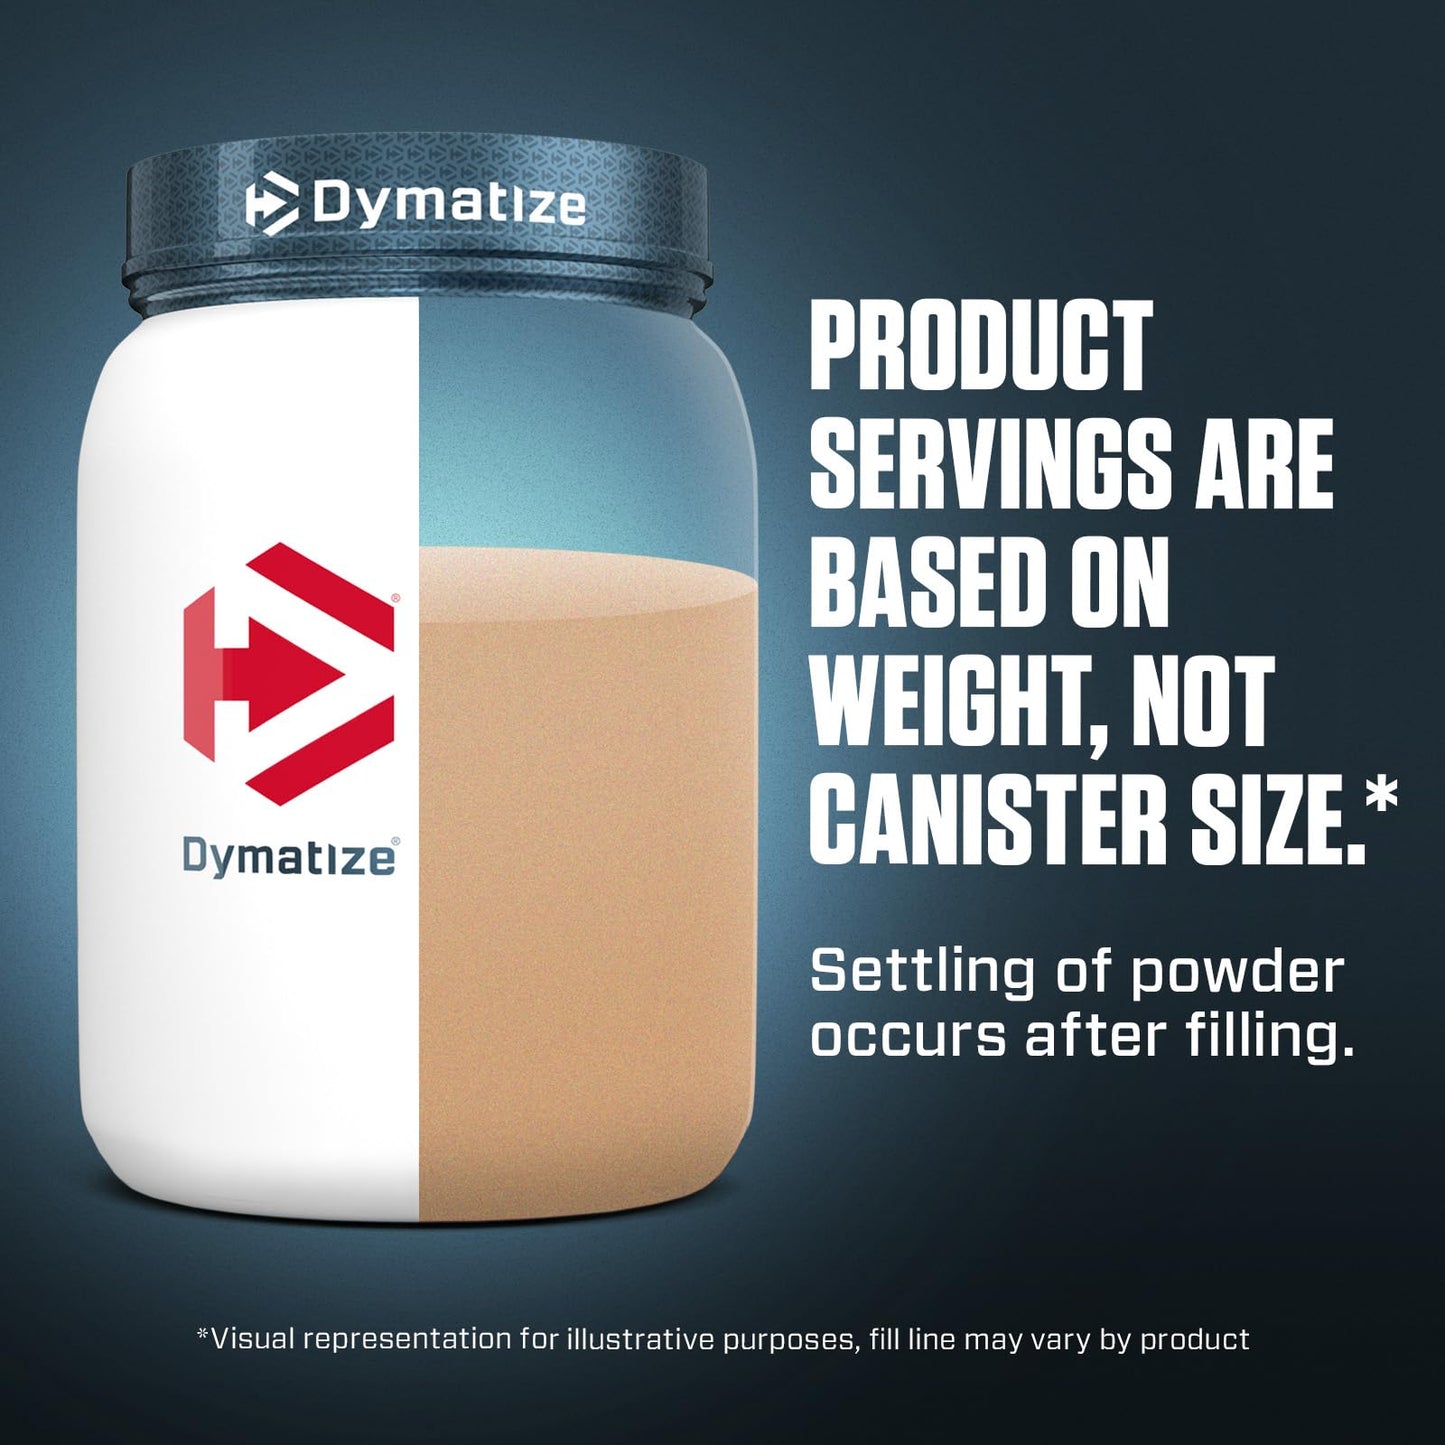 Dymatize ISO100 Hydrolyzed 100% Whey Isolate Protein Powder in Dunkin' Cappuccino Flavor, 25g Protein, 95mg Caffeine, 5.5g BCAAs, Gluten Free, Fast Absorbing, Easy Digesting, 21.5 Oz